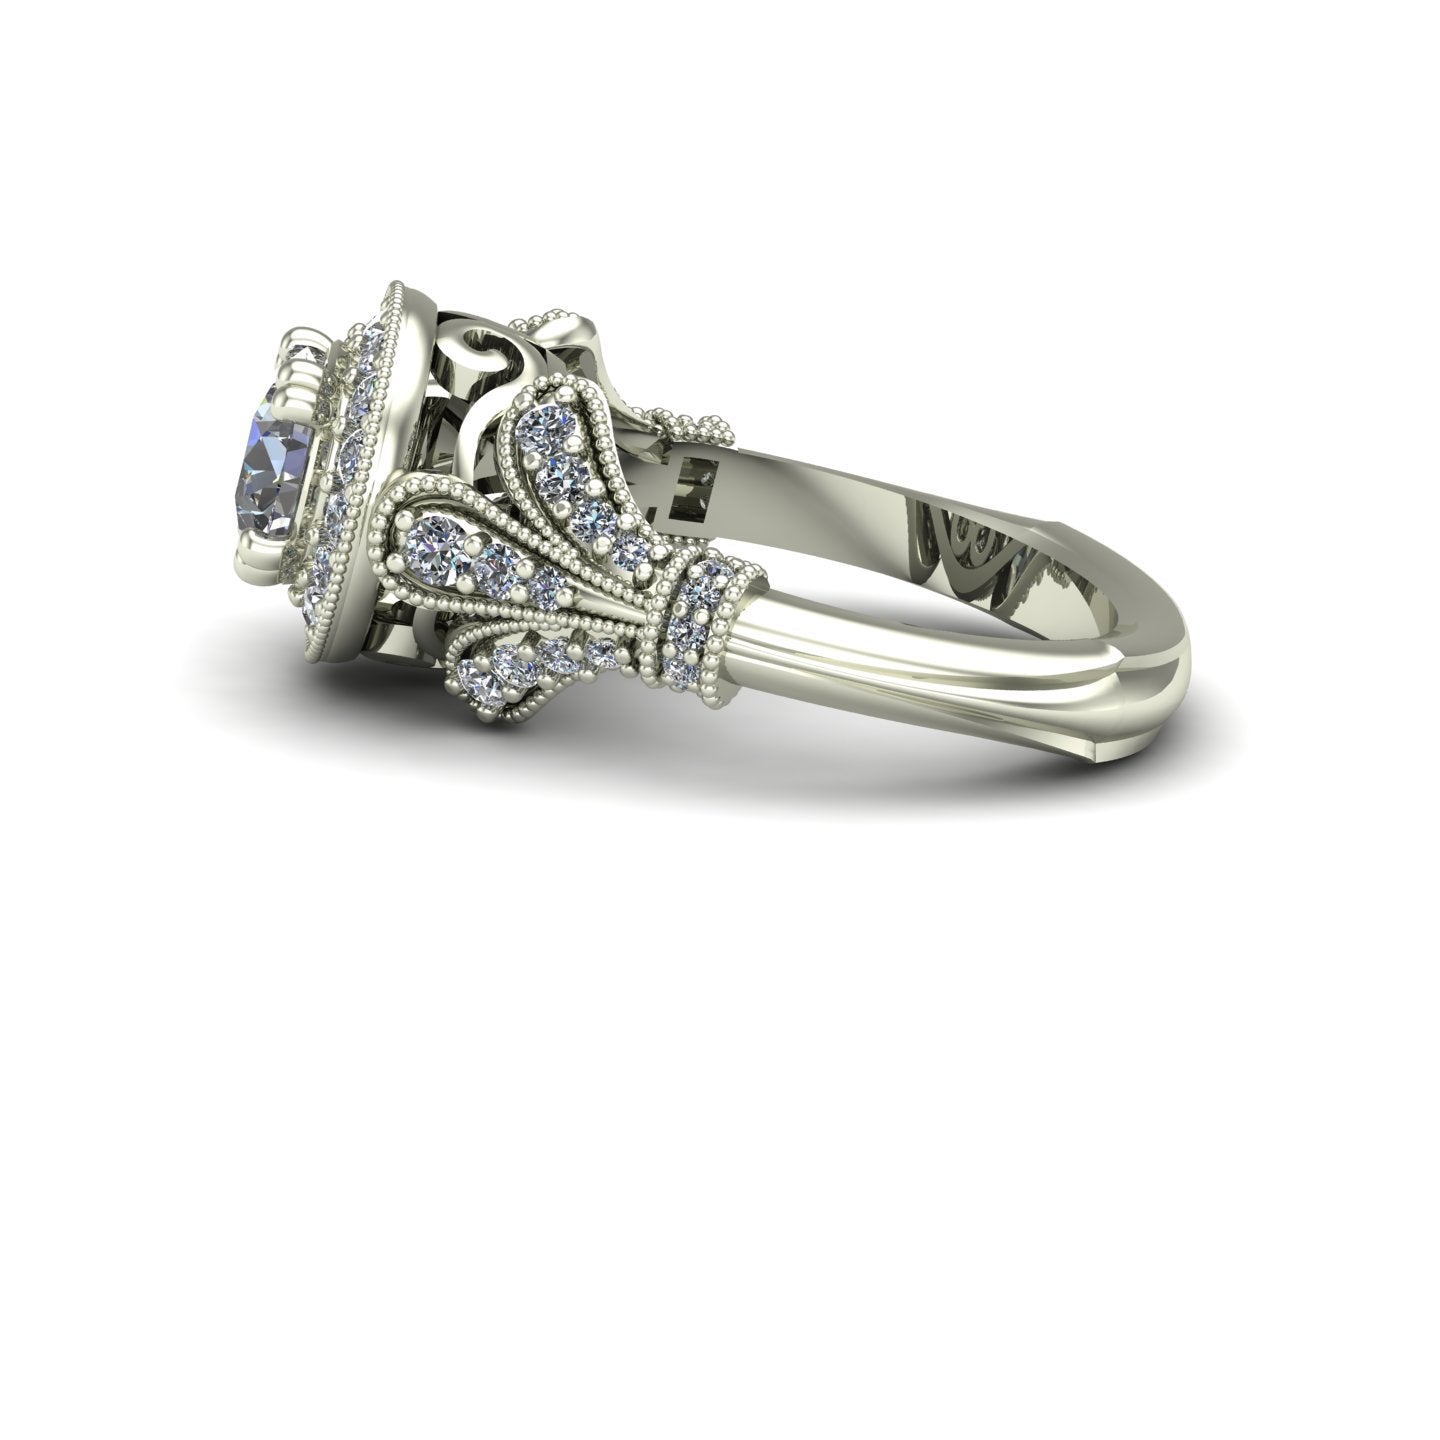 1ct Diamond halo fleur de lis engagement ring in 18k white gold - Charles Babb Designs - side view